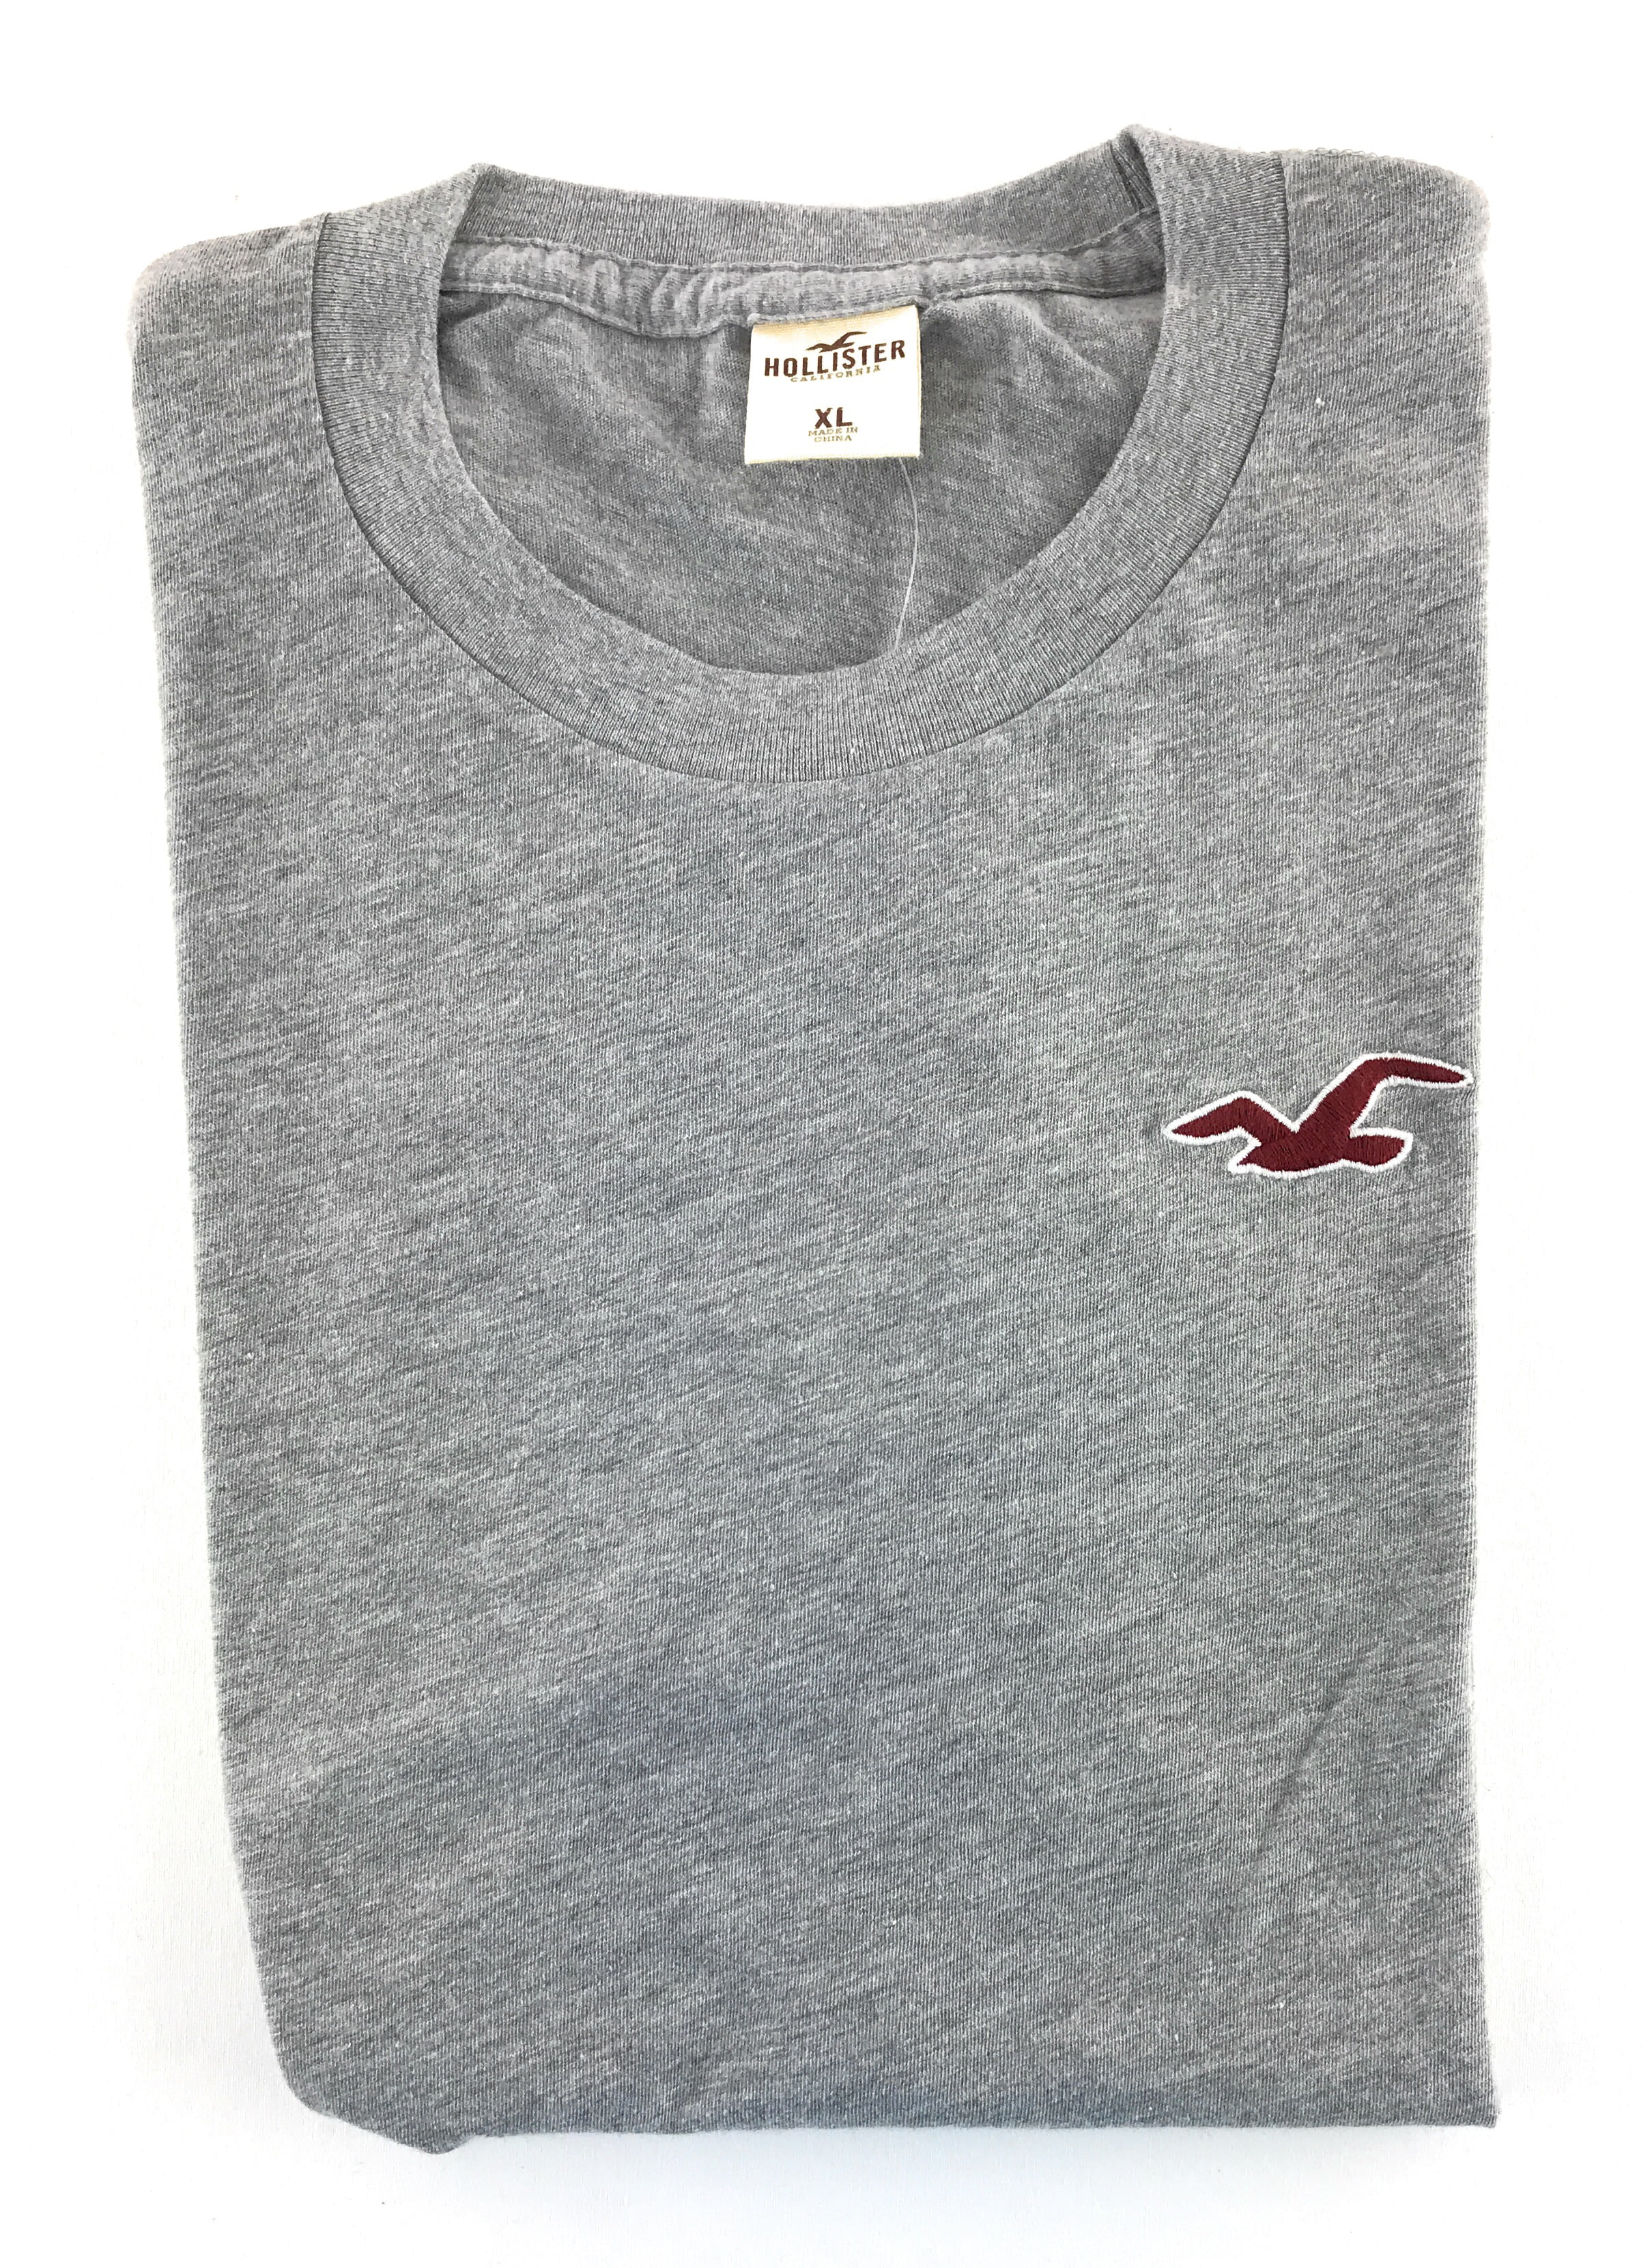 Hollister Slim Fit Henley T-Shirt Chest Pocket Seagull Logo in Gray Marl